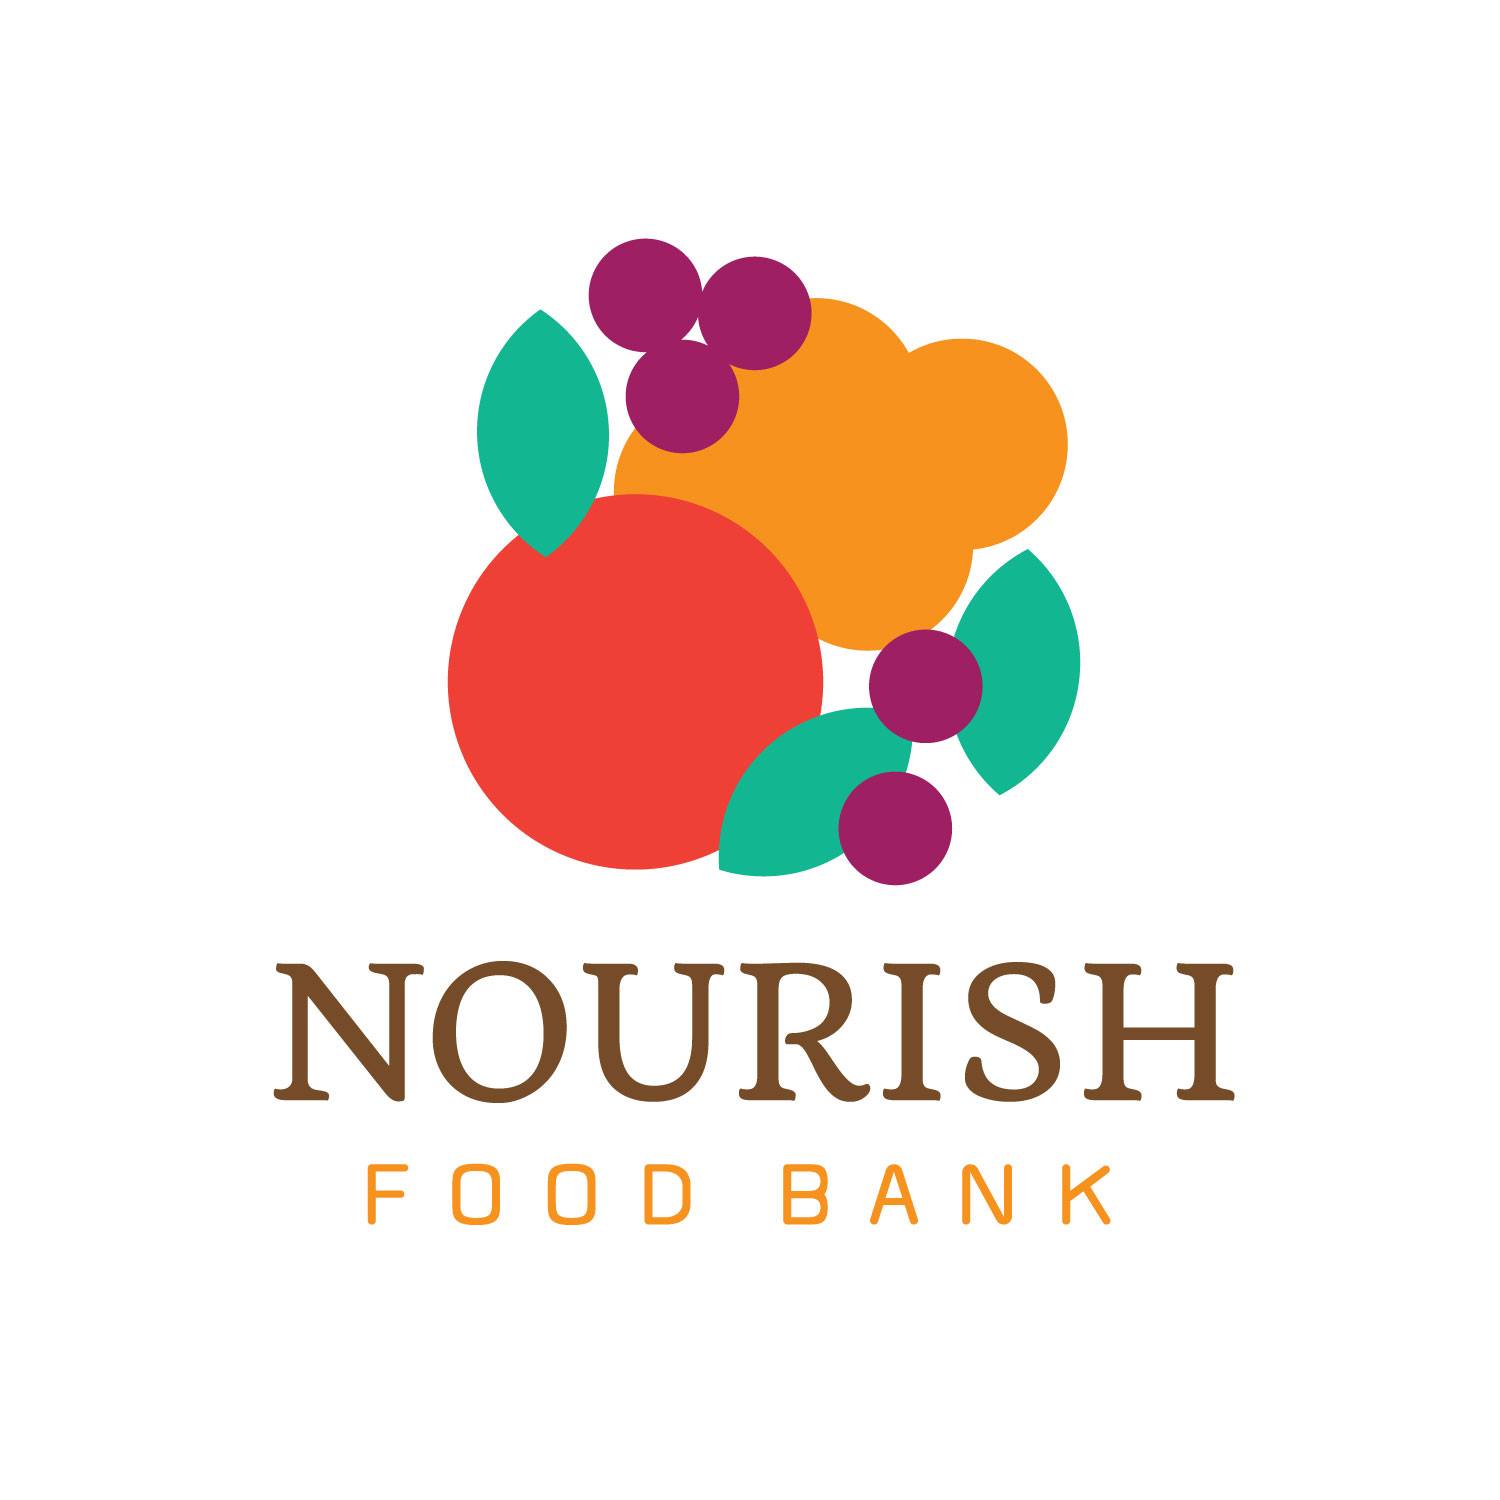 Nourish Food Bank in Smyrna